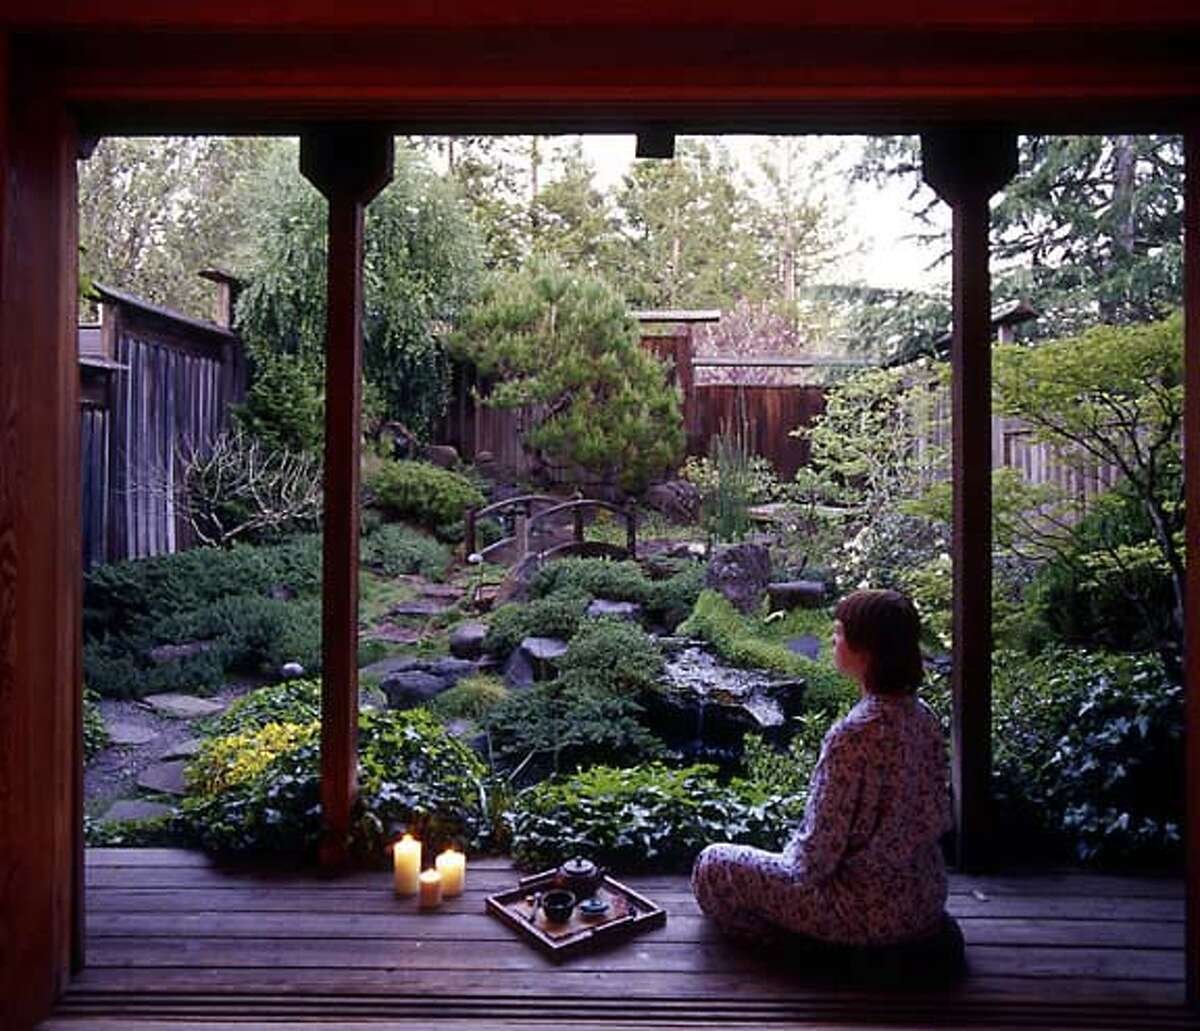 Место для медитации. Сад медитаций Нормандия. Место для медитации в саду. Сад для медитации. Японский садик для медитации.